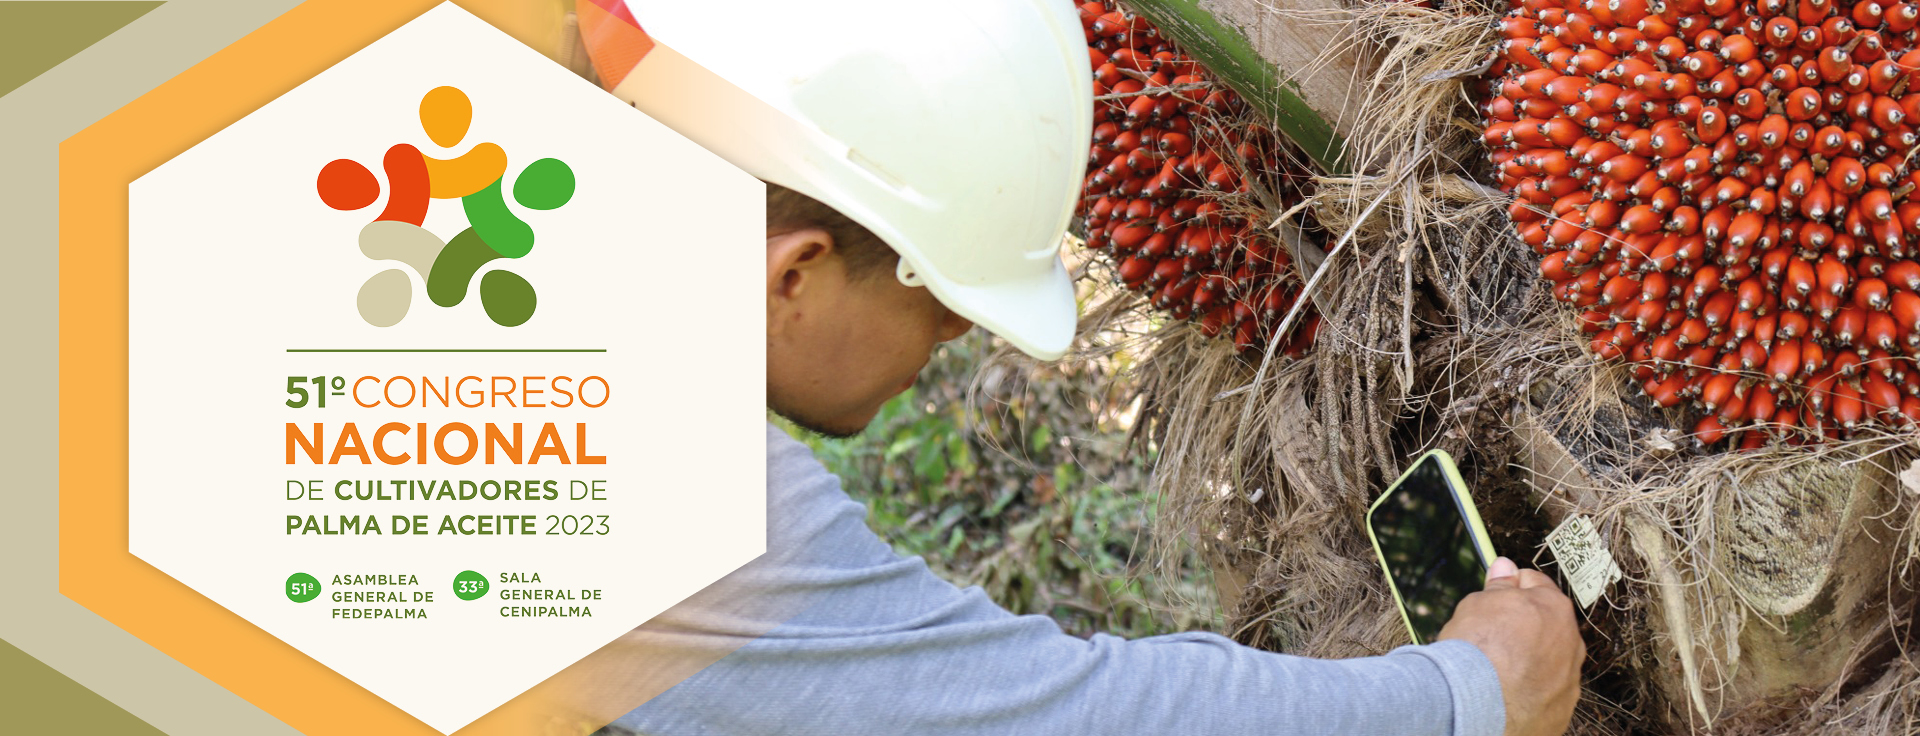 Híbrido OxG, un cultivar promisorio para la palmicultura colombiana